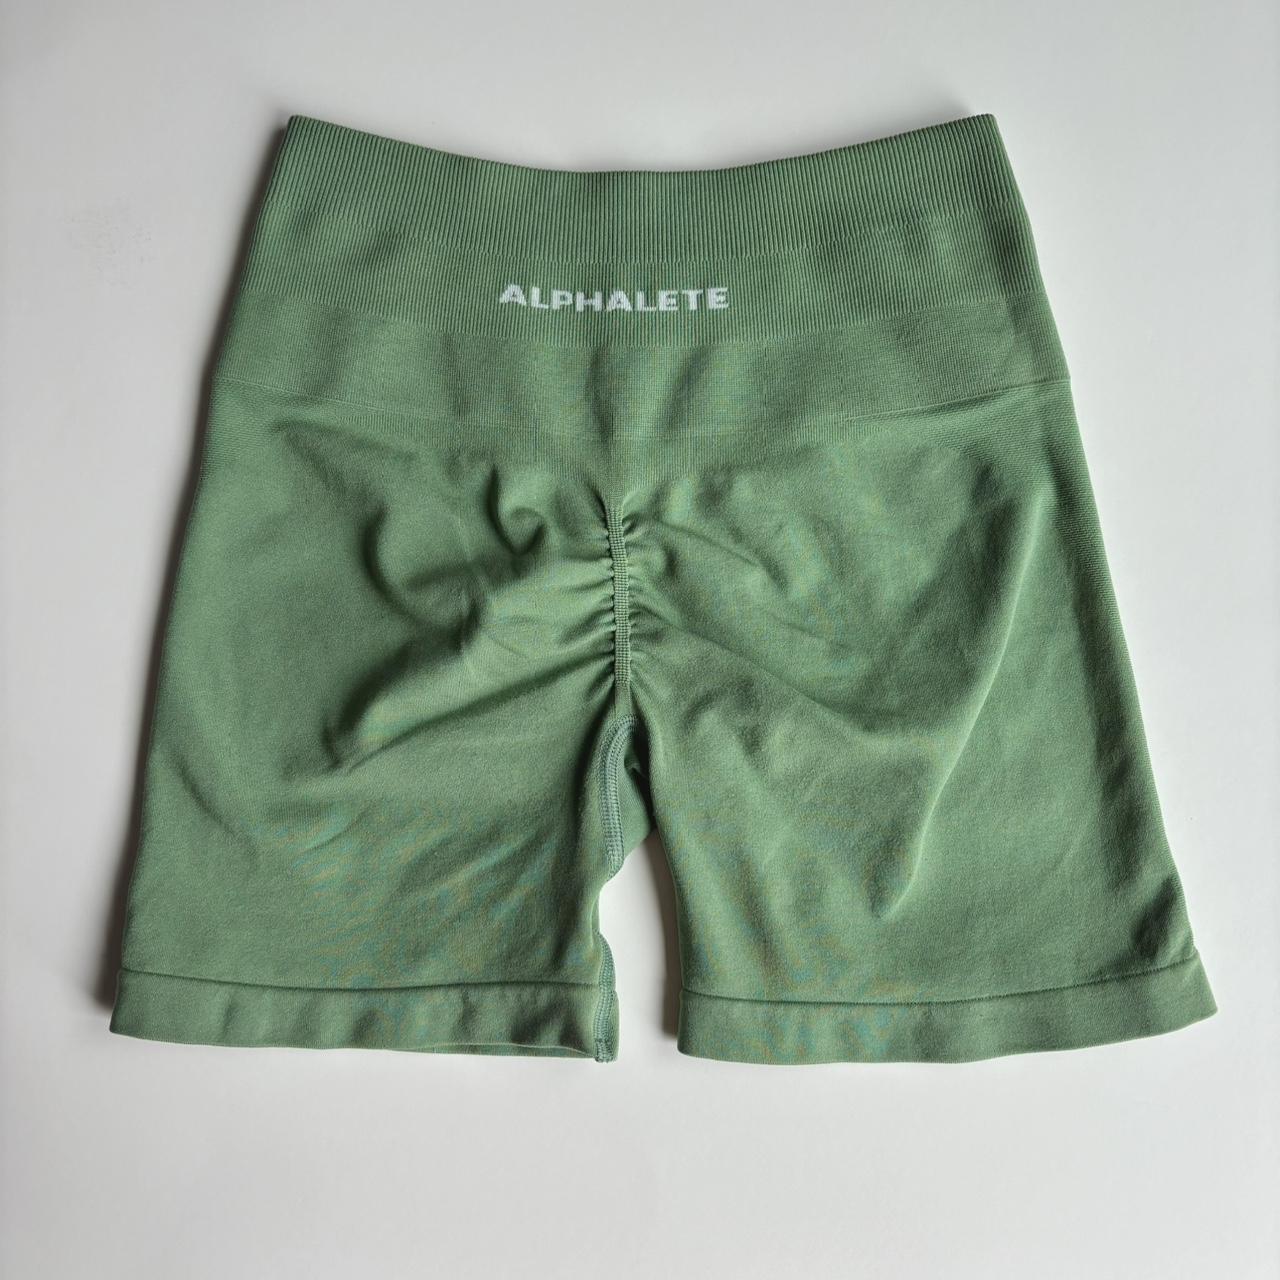 Alphalete Amplify Shorts Size XS - $48 - From Jordan